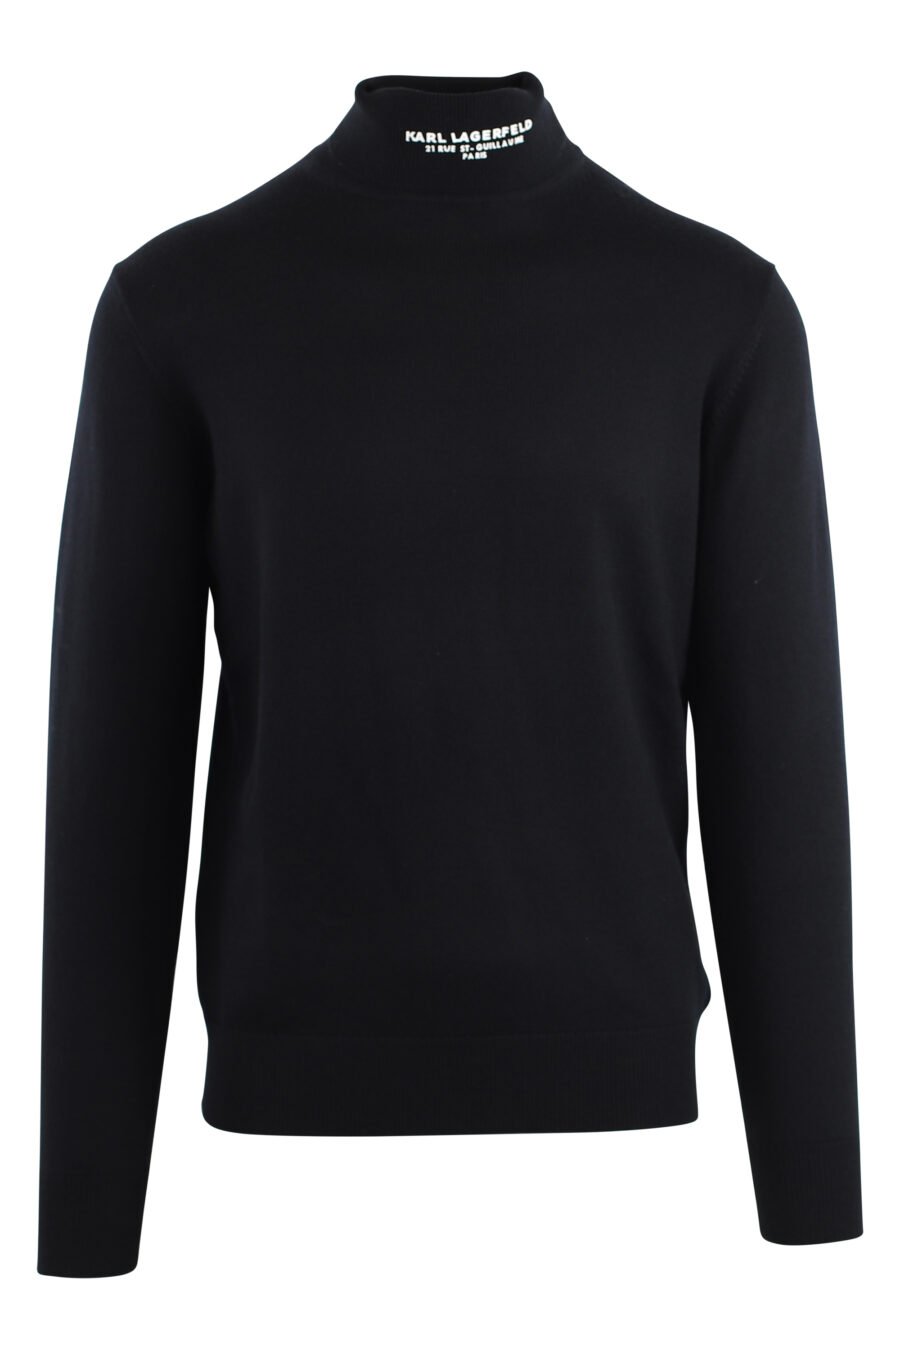 Black turtleneck jumper with logo on collar - IMG 7552